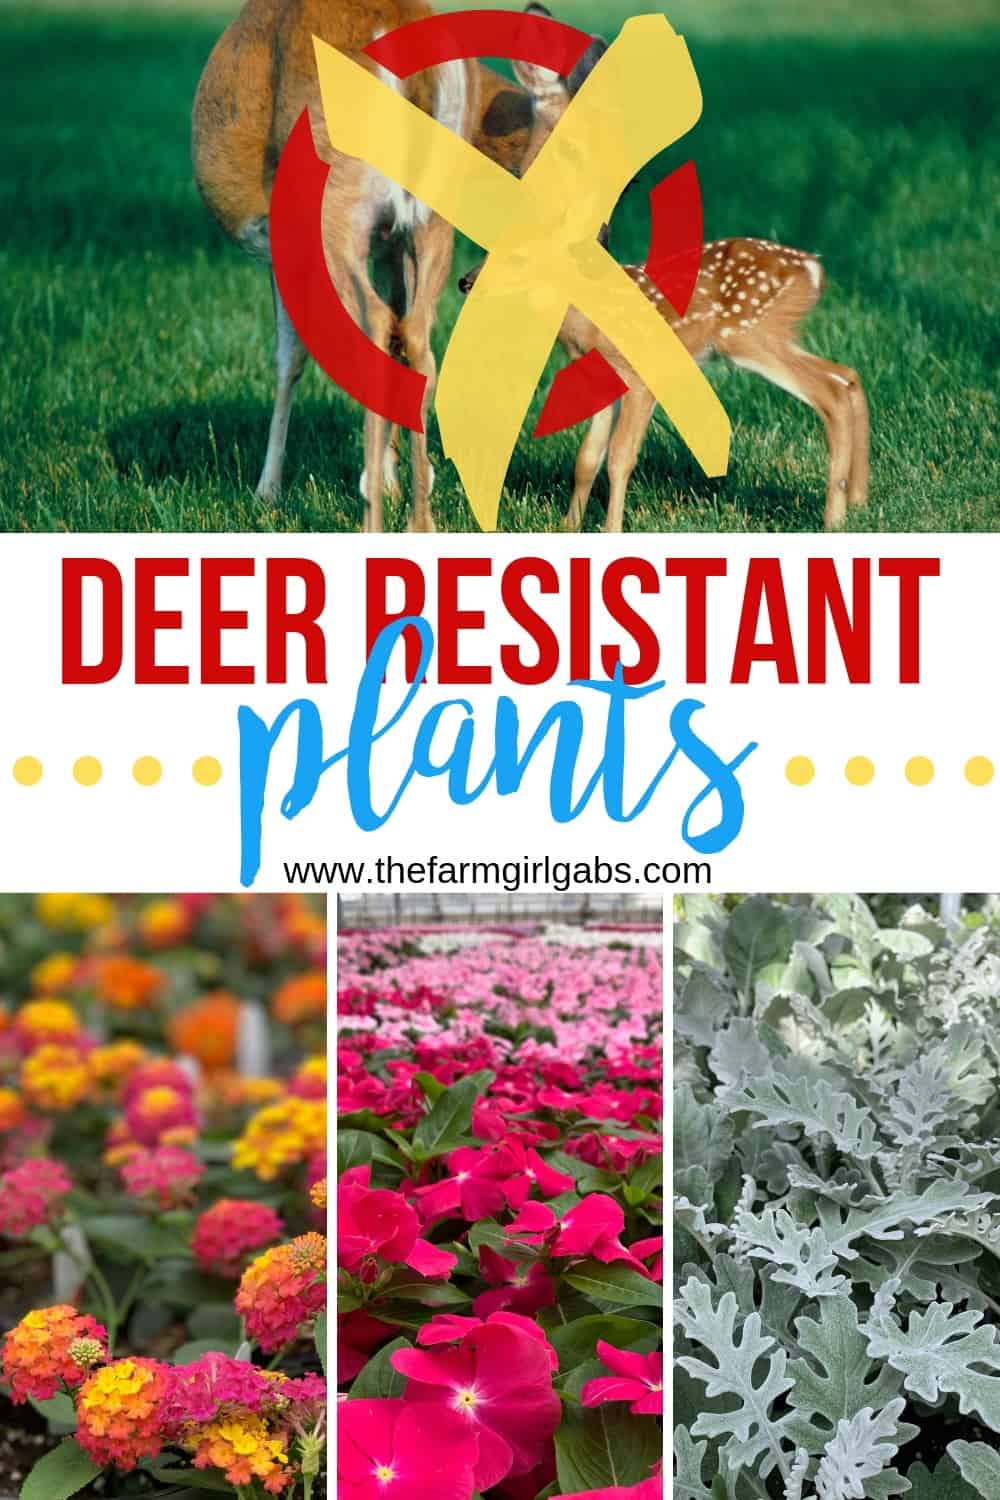 Celosia Plant Deer Resistant?